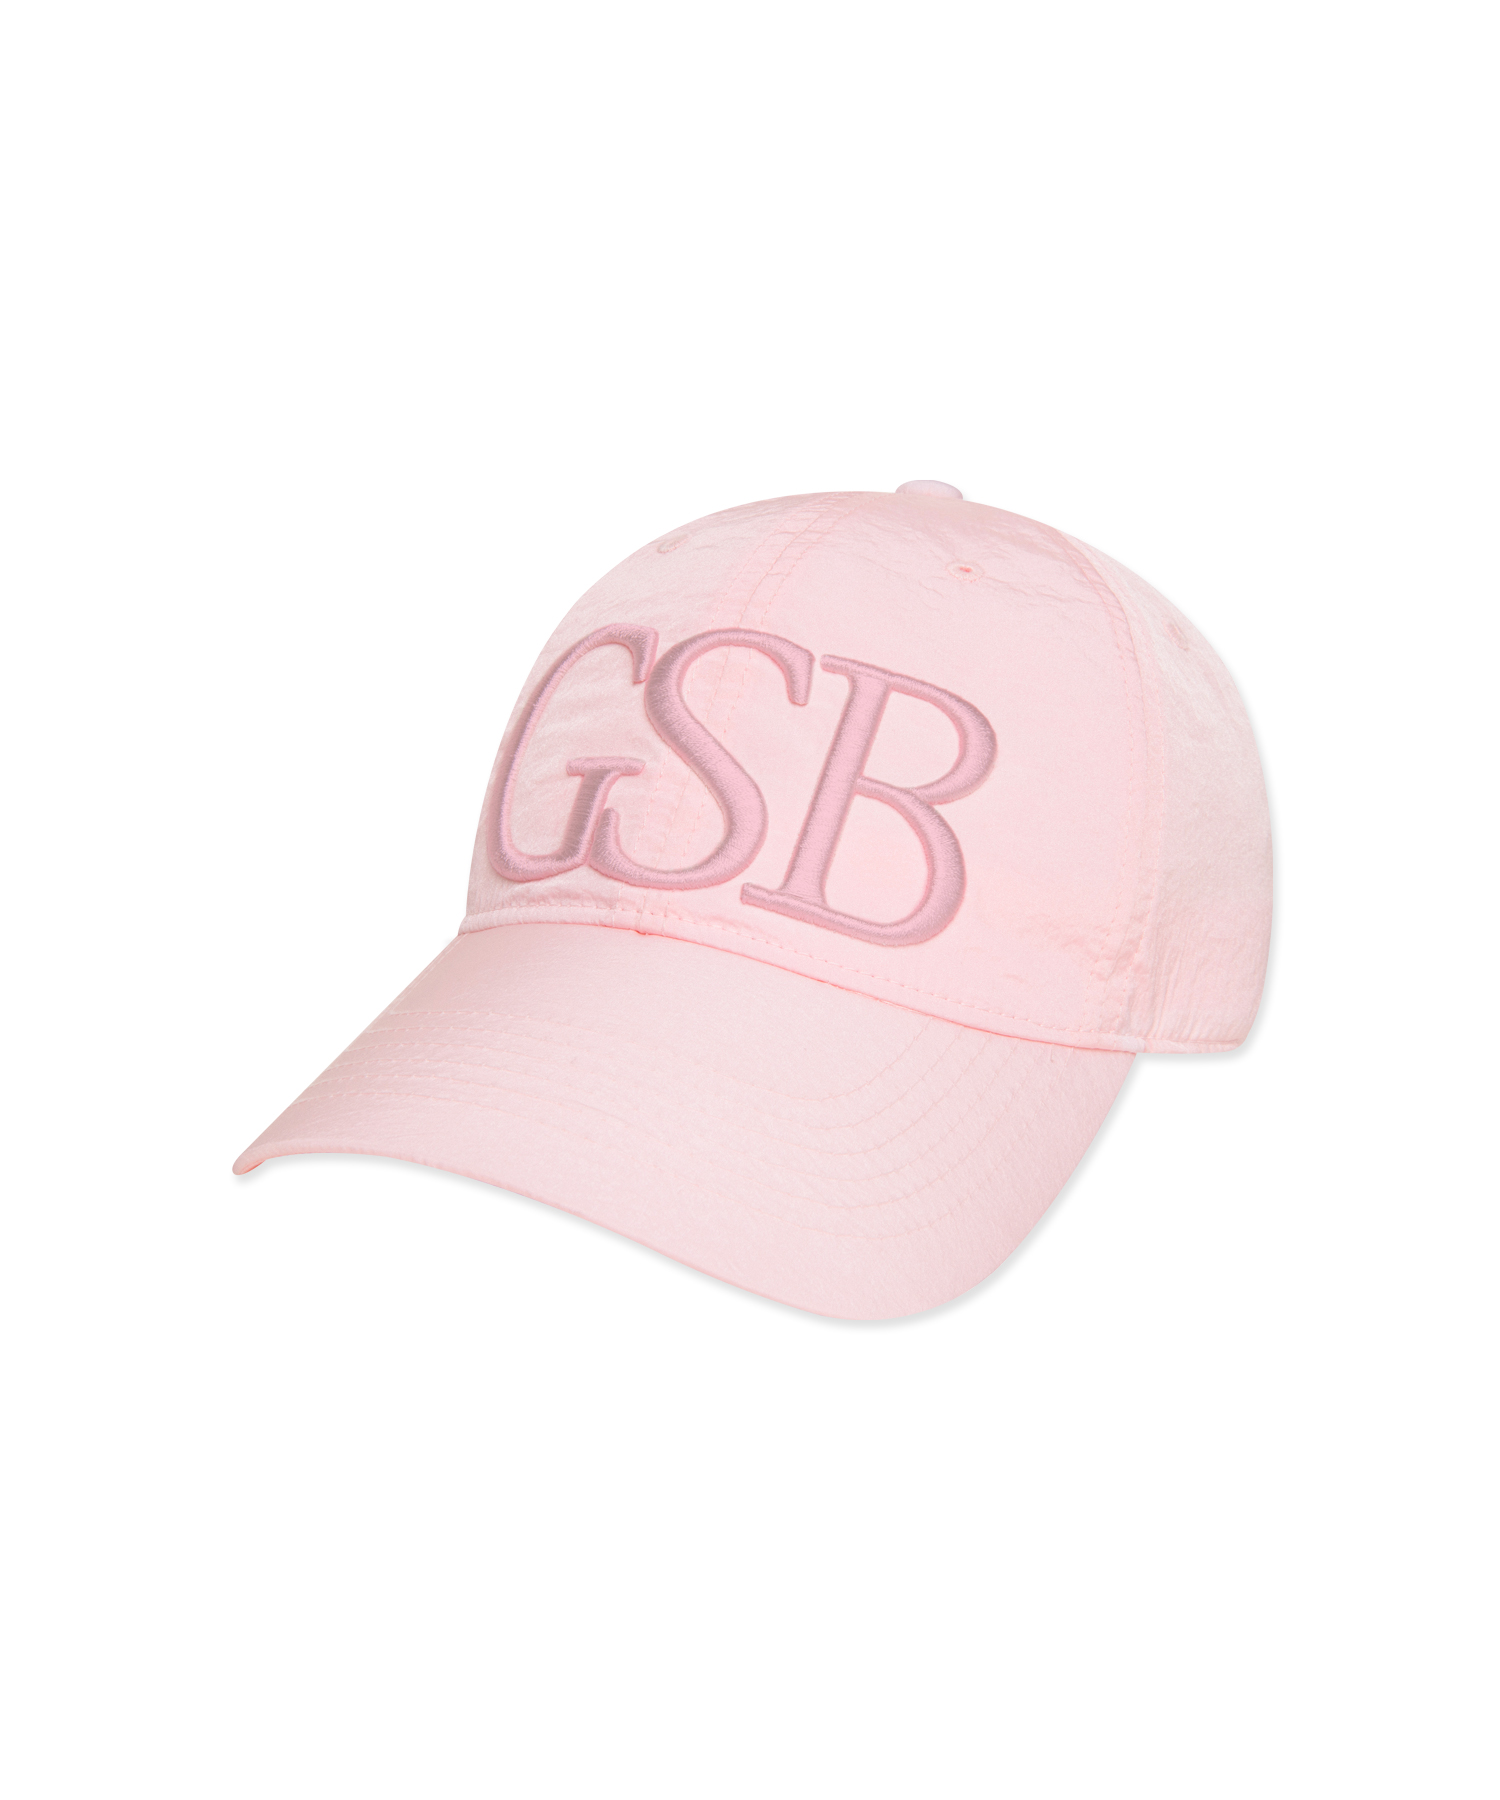 GSB GLOSSY CAP pink